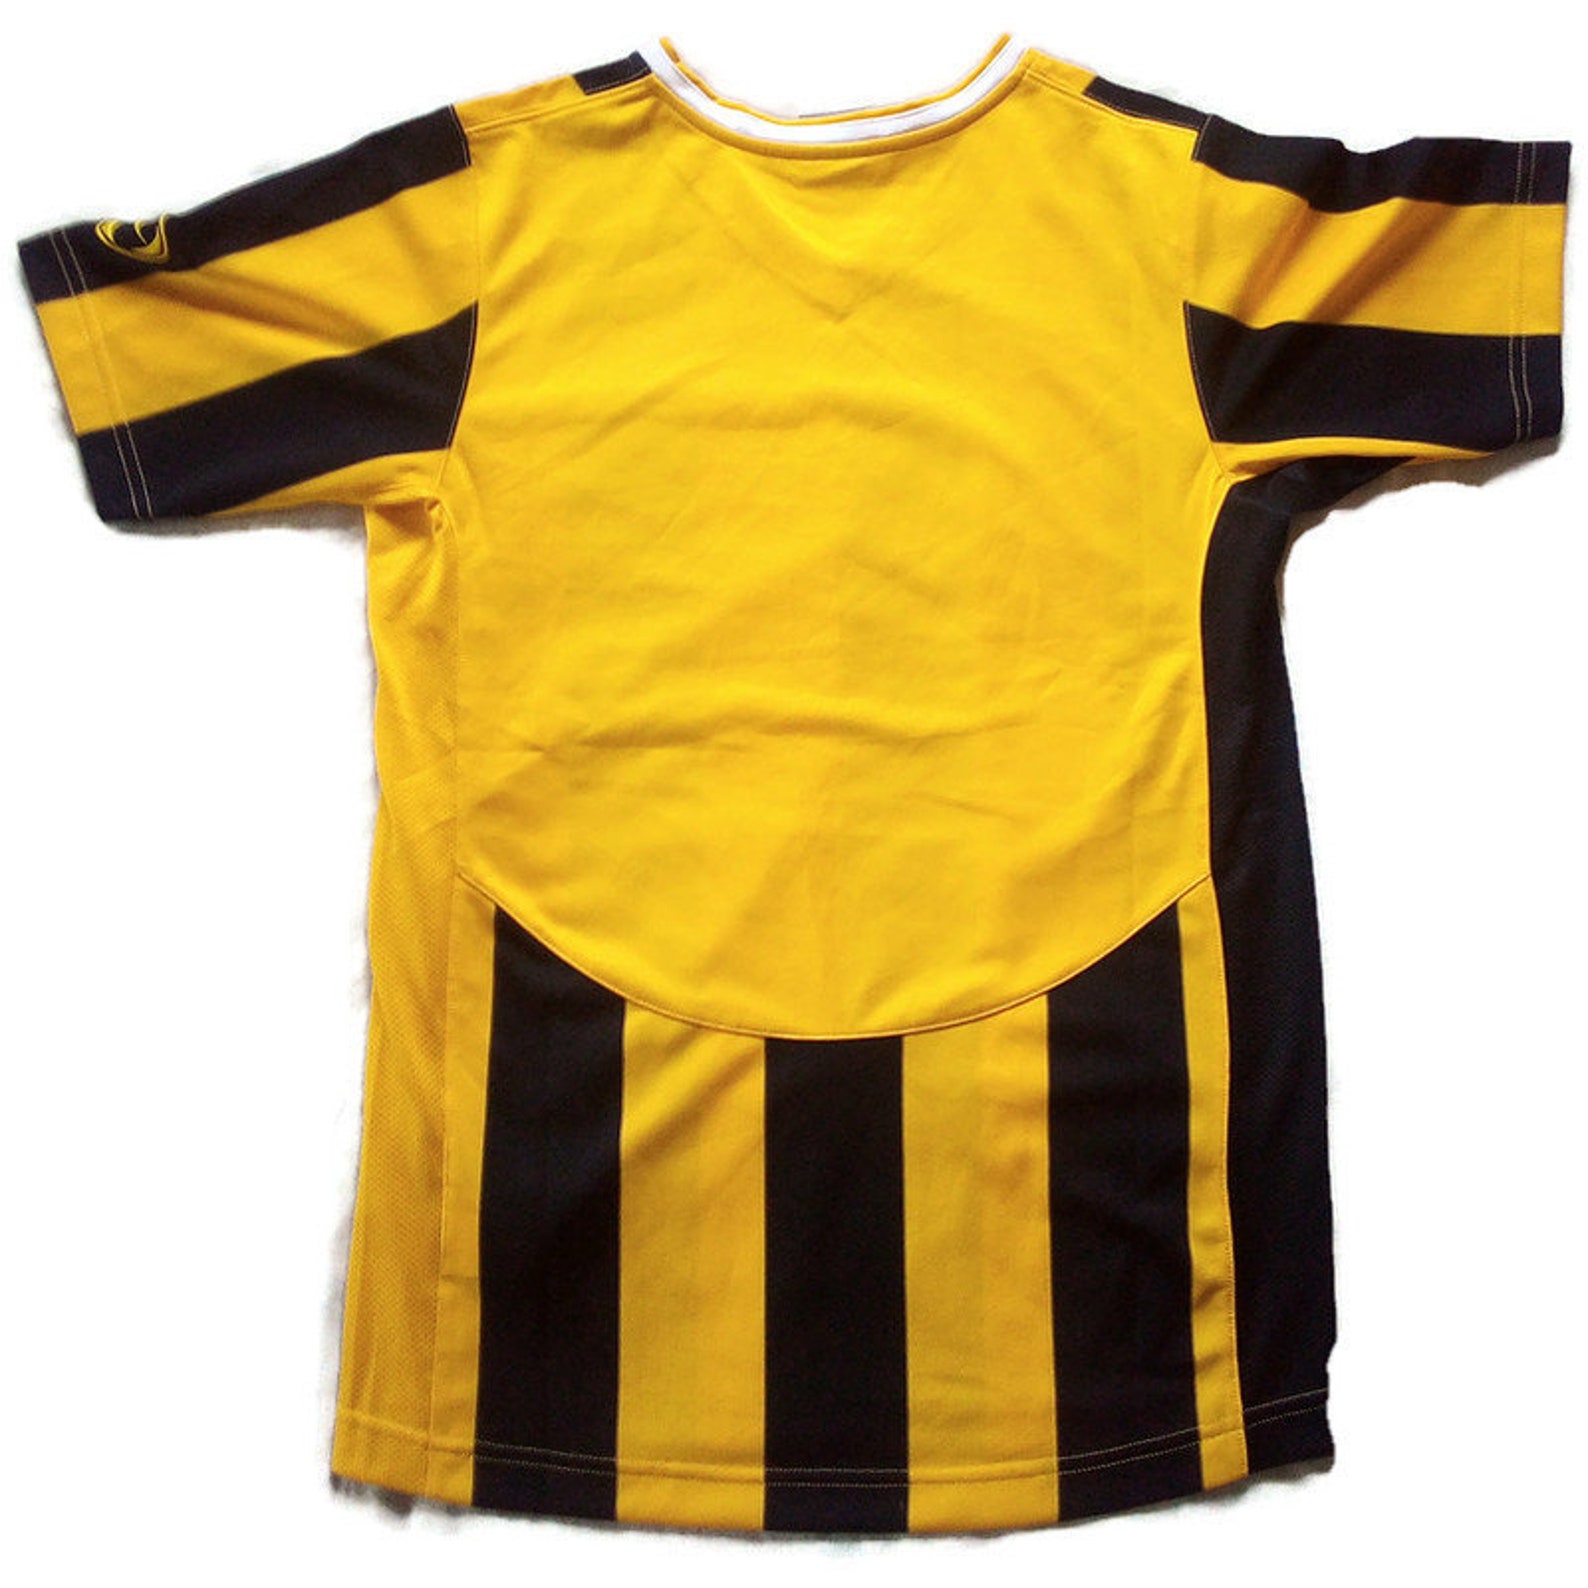 Nike t-shirt yellow black football attribute sport running tee | Etsy